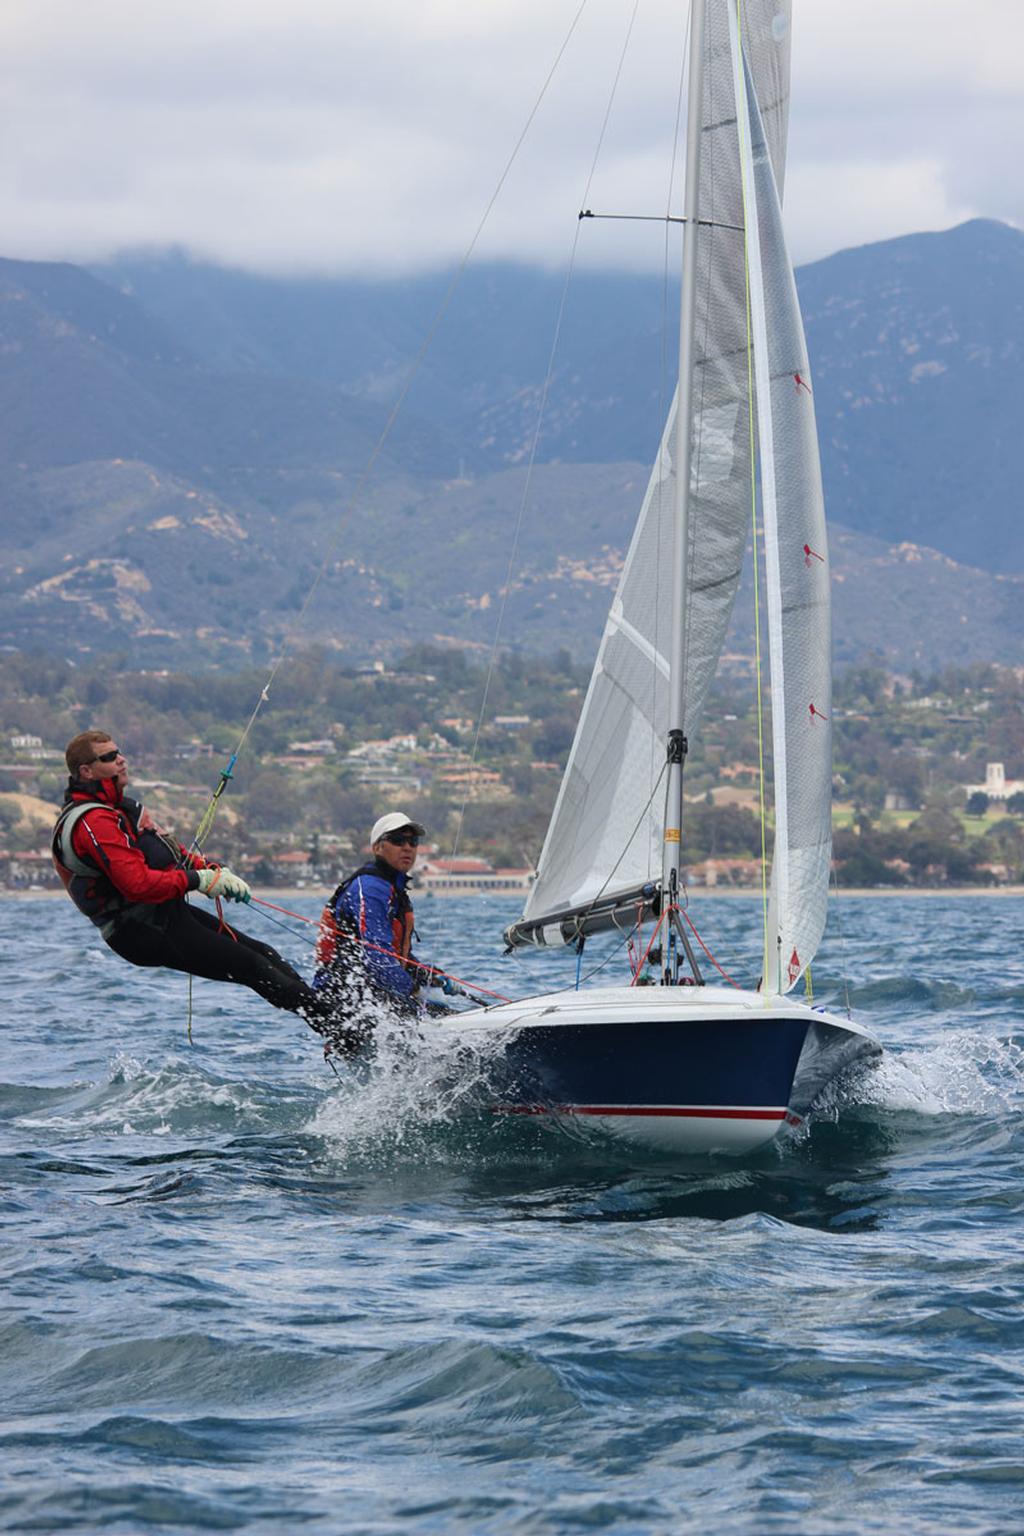 Doug Hagan (helm) came from Hawaii to part the Santa Barbara waves with Paul Von Grey (crew). © Jane Watkins